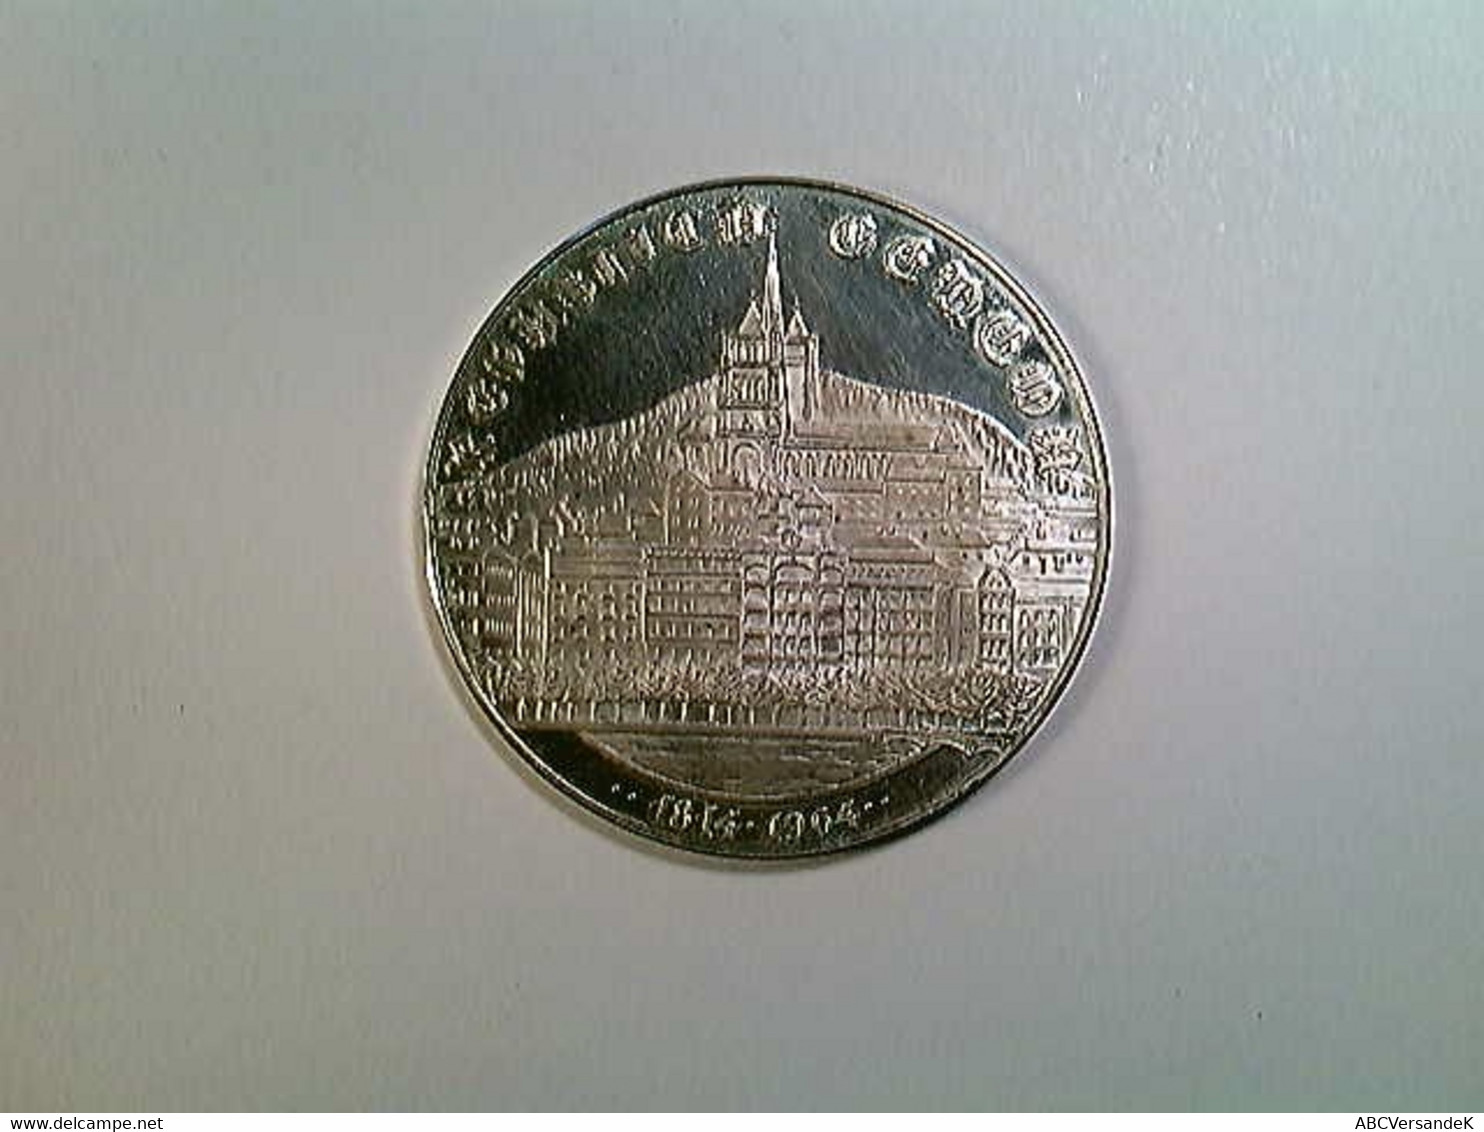 Münze Republica Geneva 1814-1964, Schweiz Kantonalmünze, Argor, Silber, SELTEN! - Numismatics